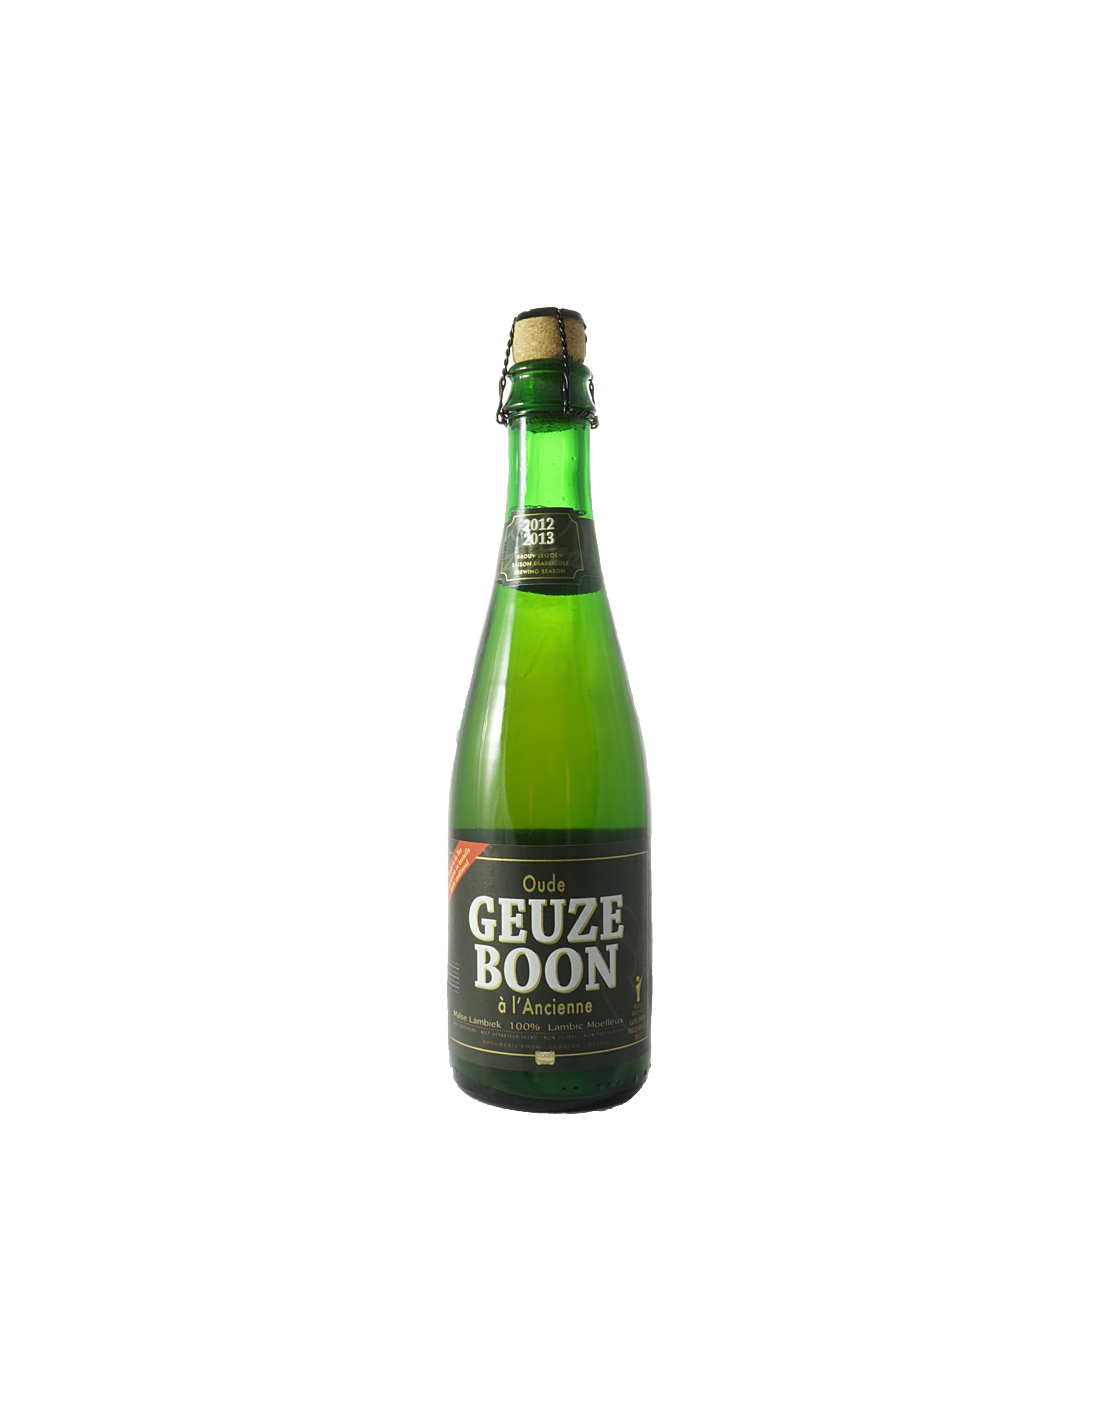 Bere amber, nefiltrata Boon Gueuze, 7% alc., 0.25L, Belgia alcooldiscount.ro